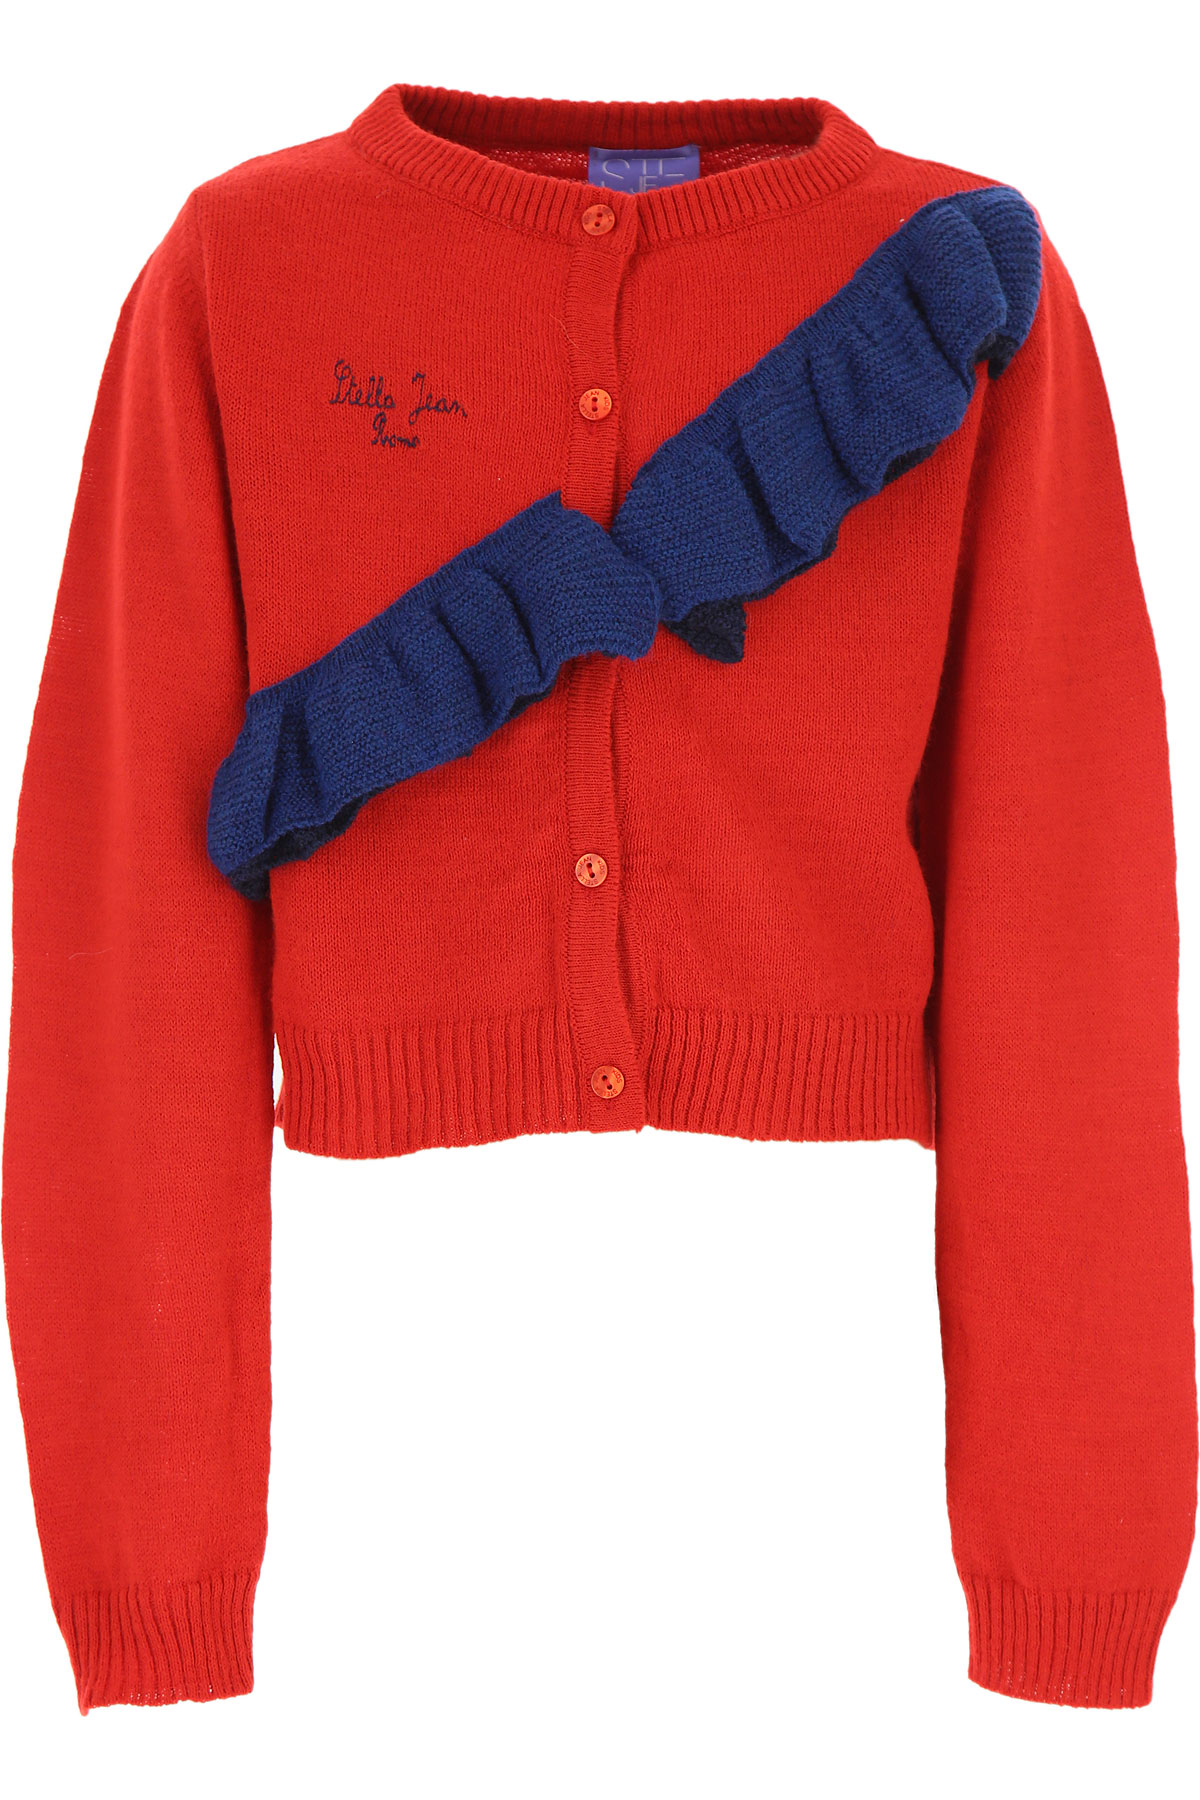 Stella Jean Kinder Pullover für Mädchen Günstig im Sale, Rot, Acryl, 2017, 10Y 4Y 6Y 8Y